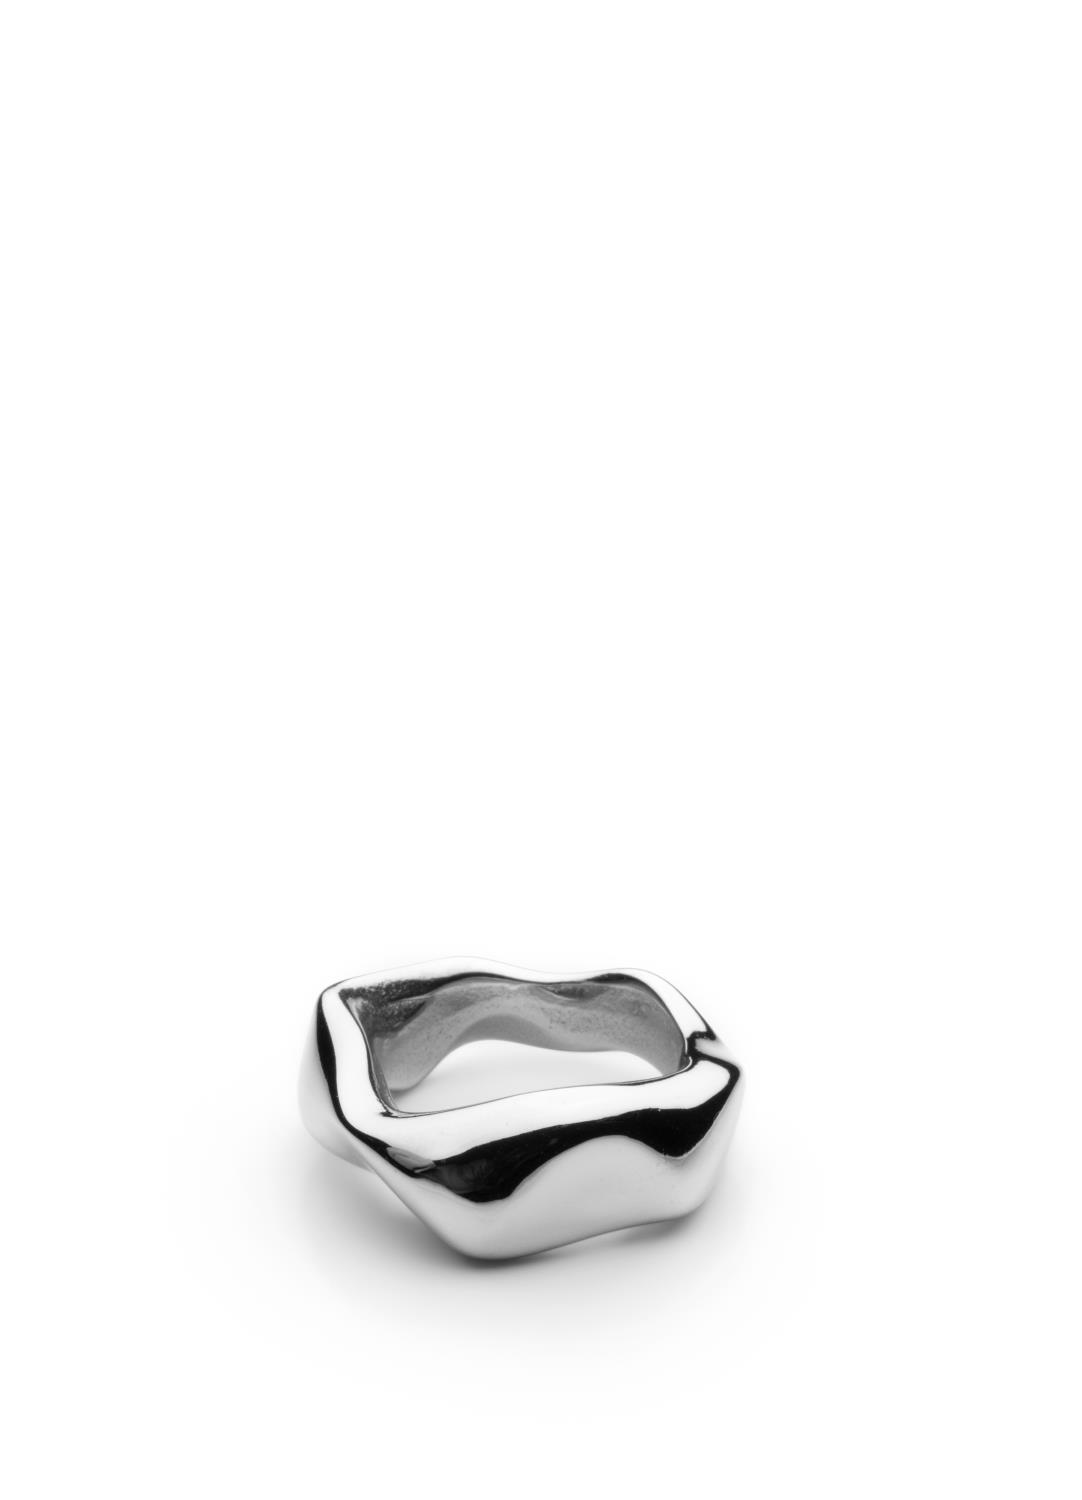 Skultuna - Chunky Petit Ring - Polished Steel